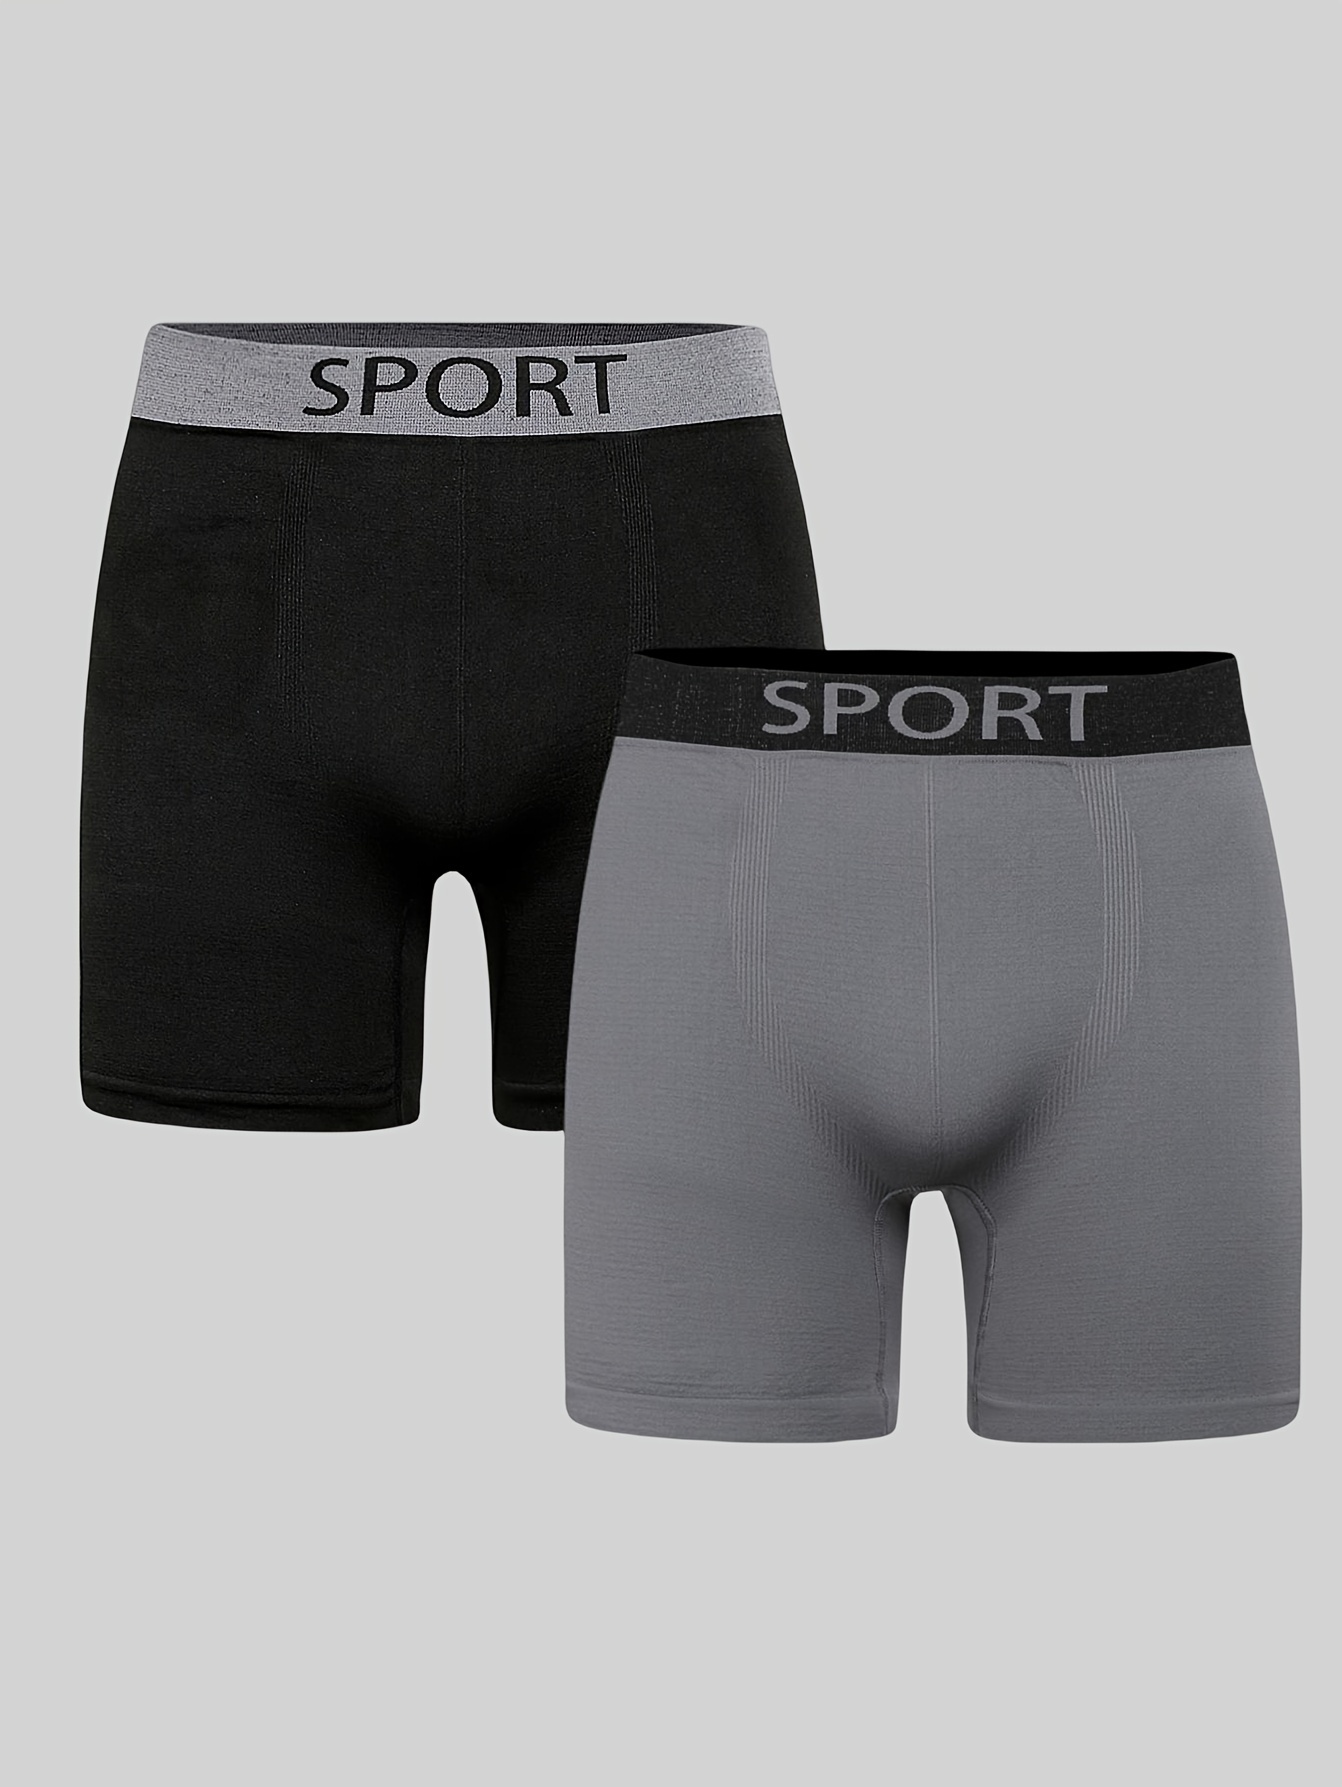 Men's Underwear Cotton Briefs Breathable Youth Underwear Plus Size Medium  Waist Triangle Boxing Underwear M-5XL Color: A13, Size: 5XL 105-125KG